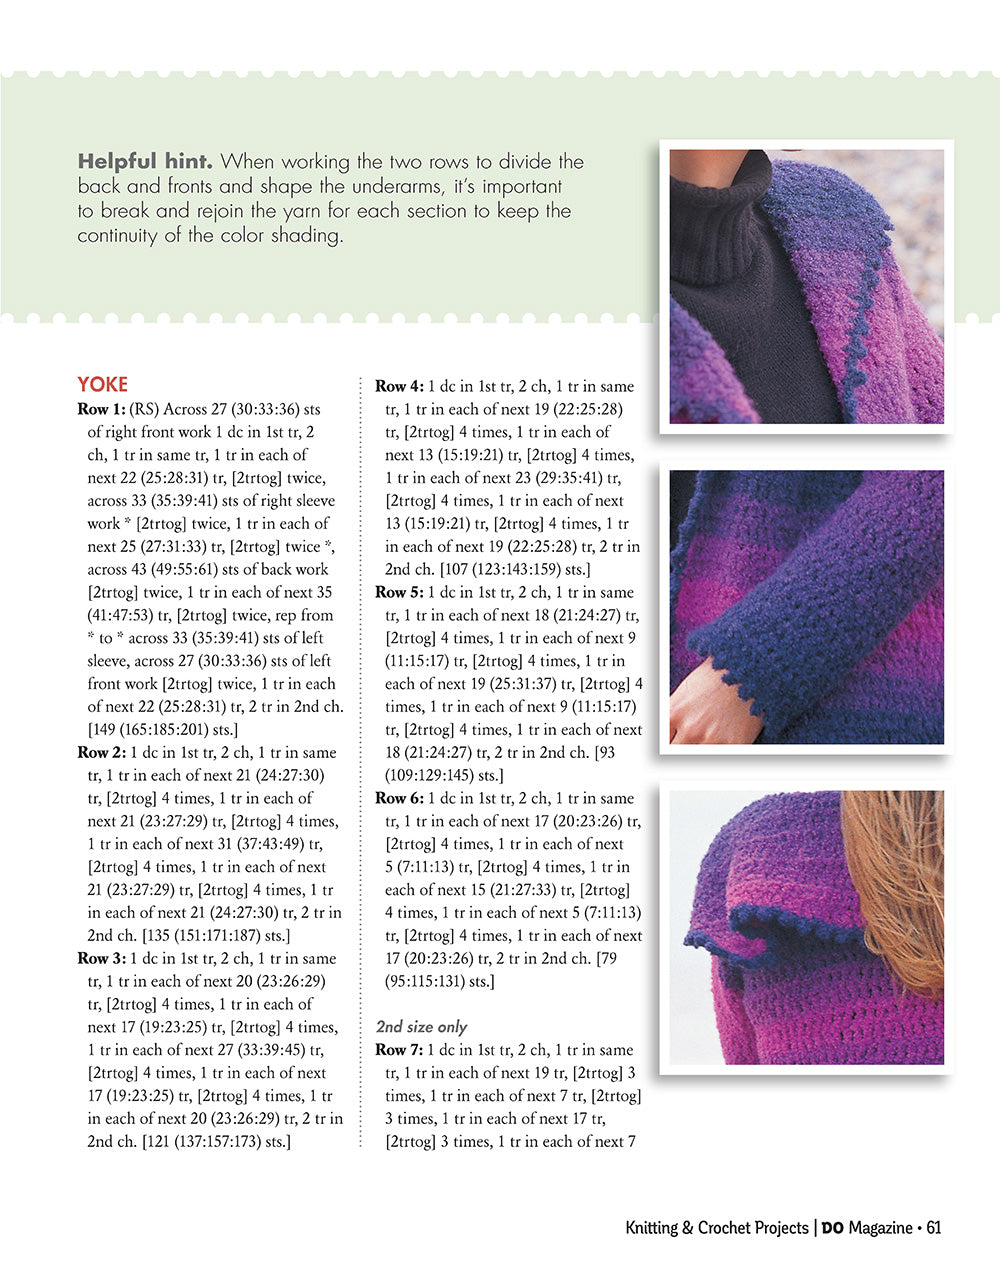 DO Magazine Presents Knitting & Crochet Projects